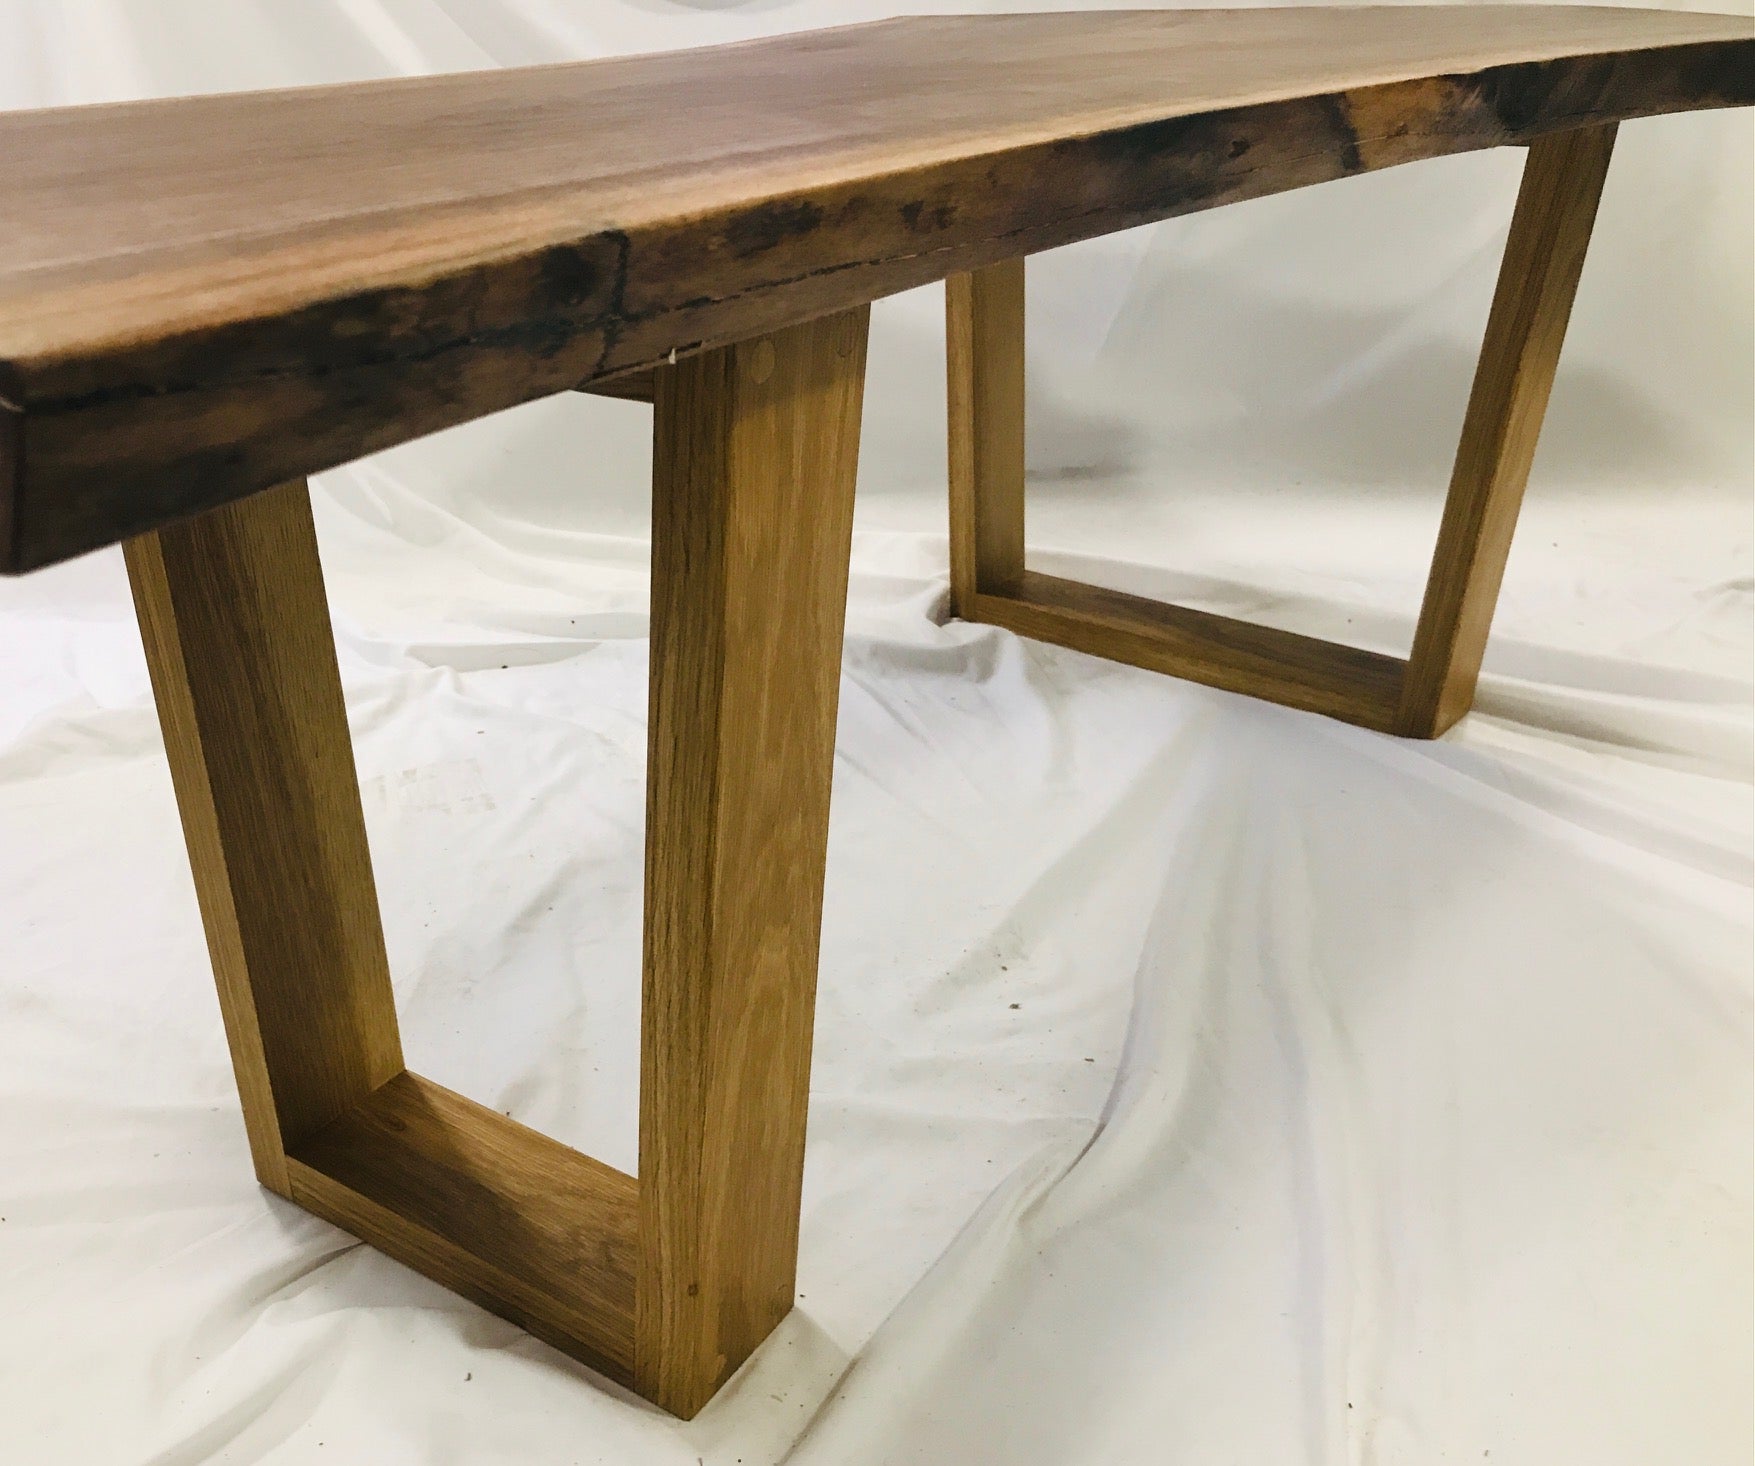 live edge walnut coffee table with white oak legs - leg detail view